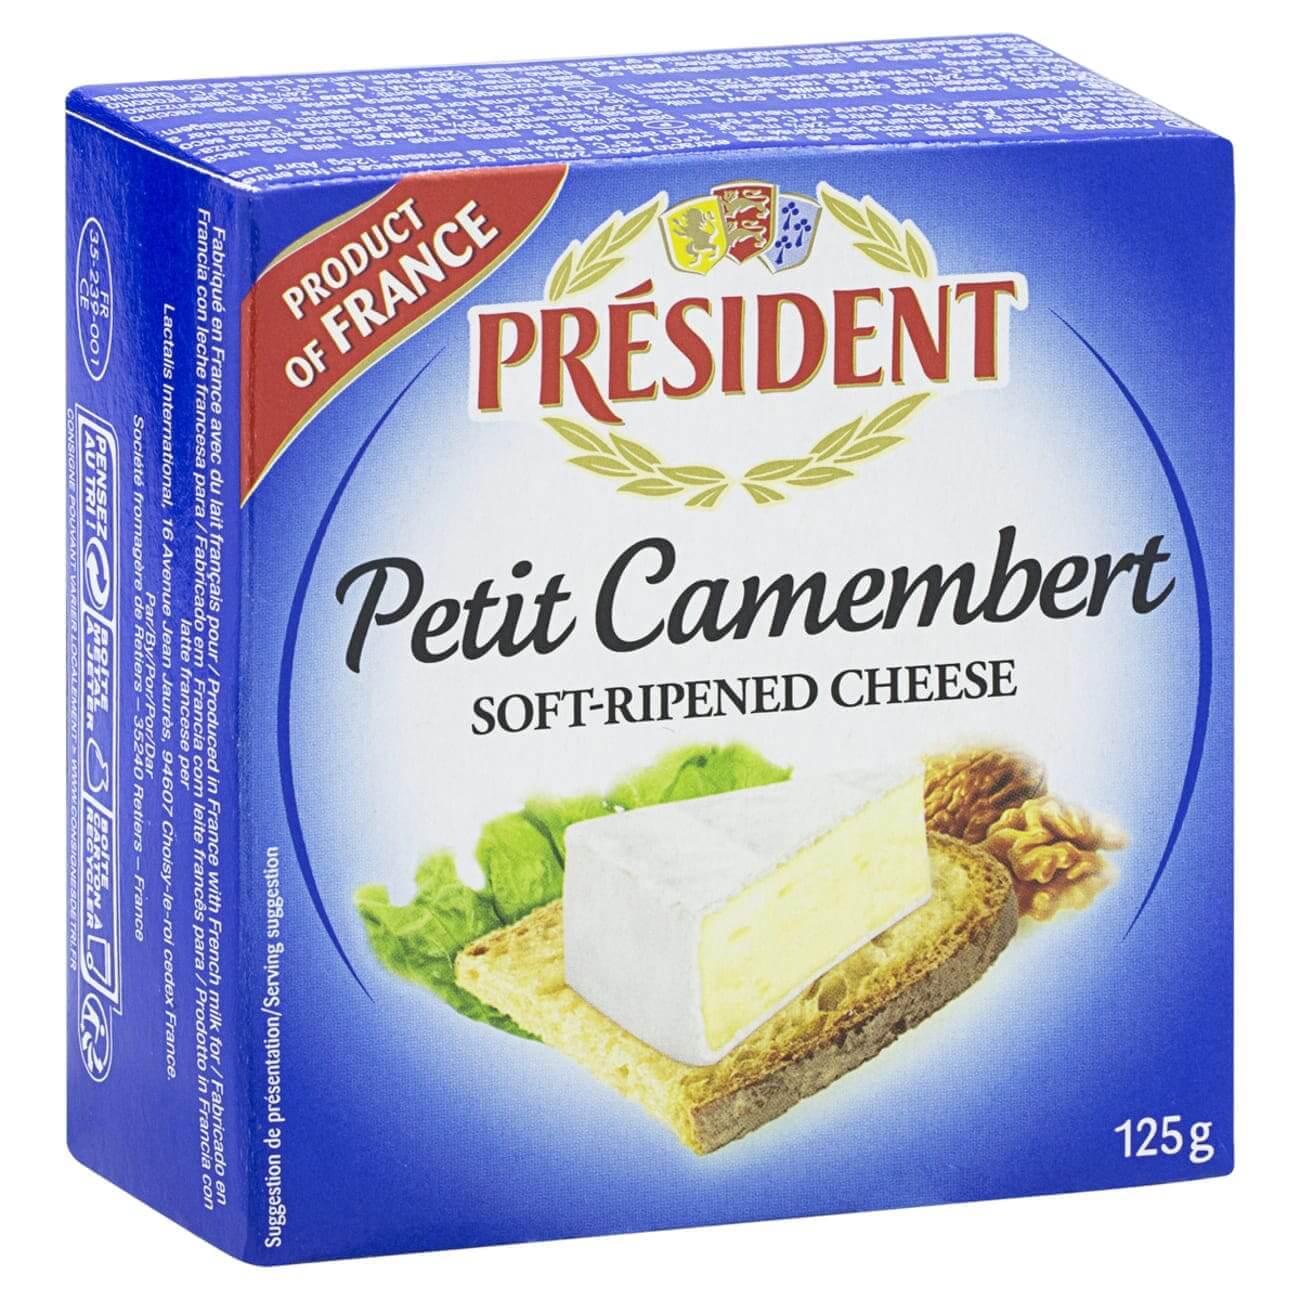 Queijo Petit Camembert Prsident 125g